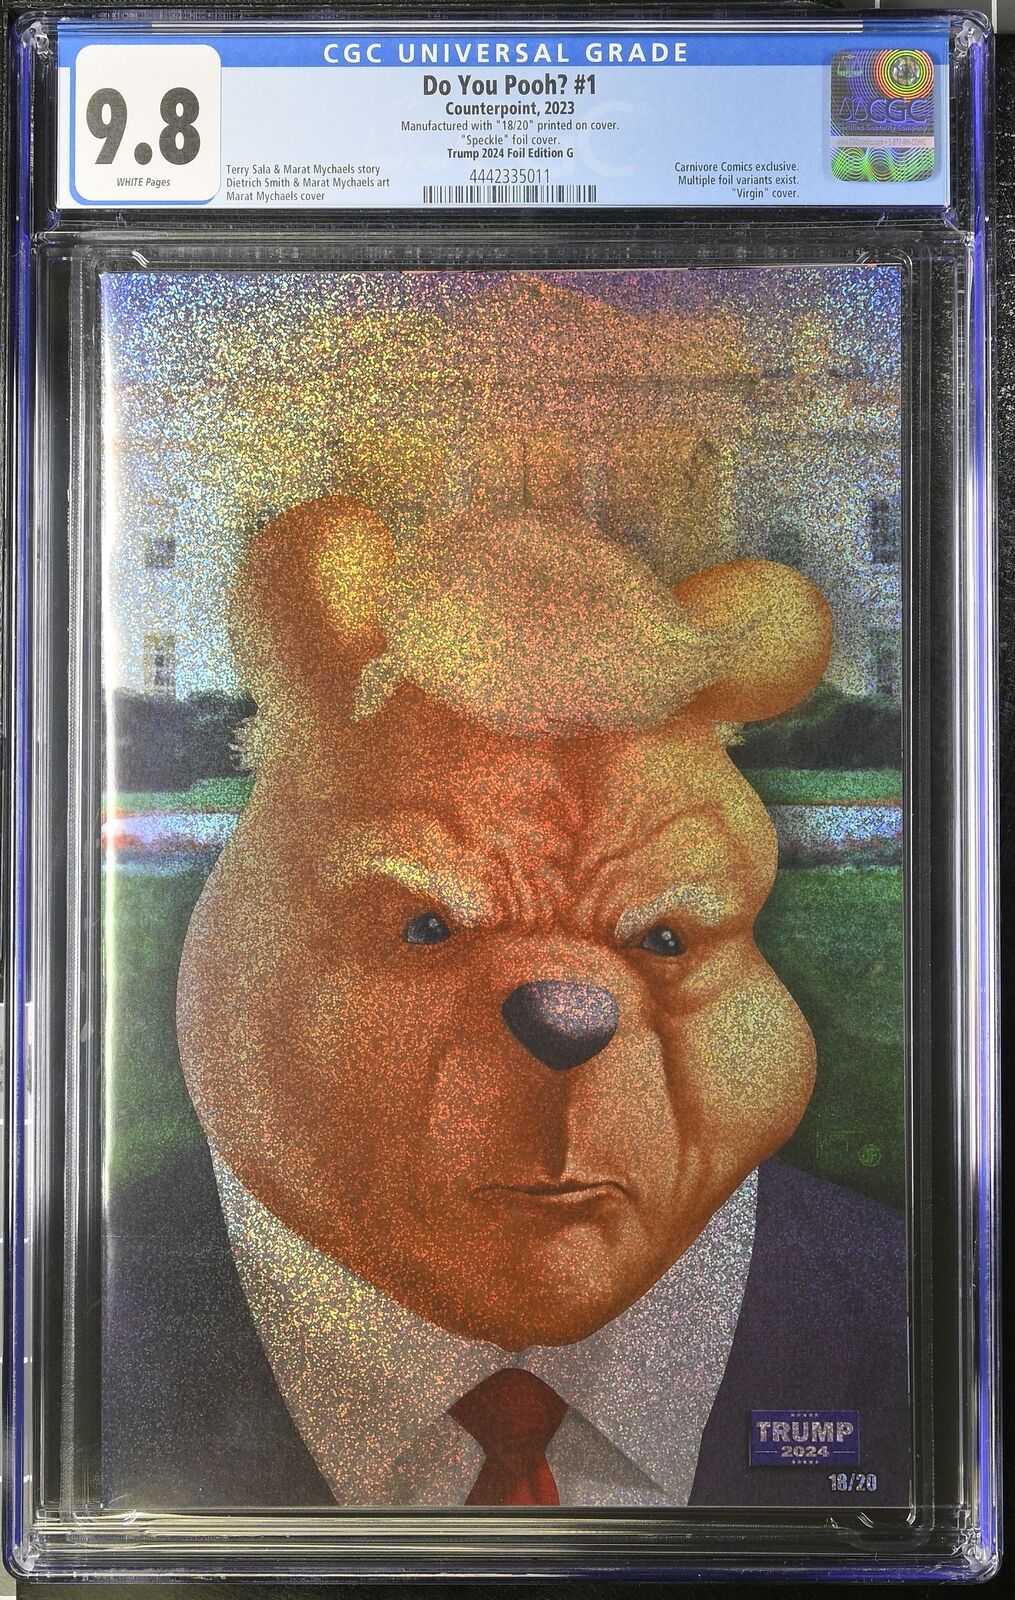 Do You Pooh? Trump 2024 Speckle Foil Edition G CGC 9.8 /20 Mychaels Cover [JU61]